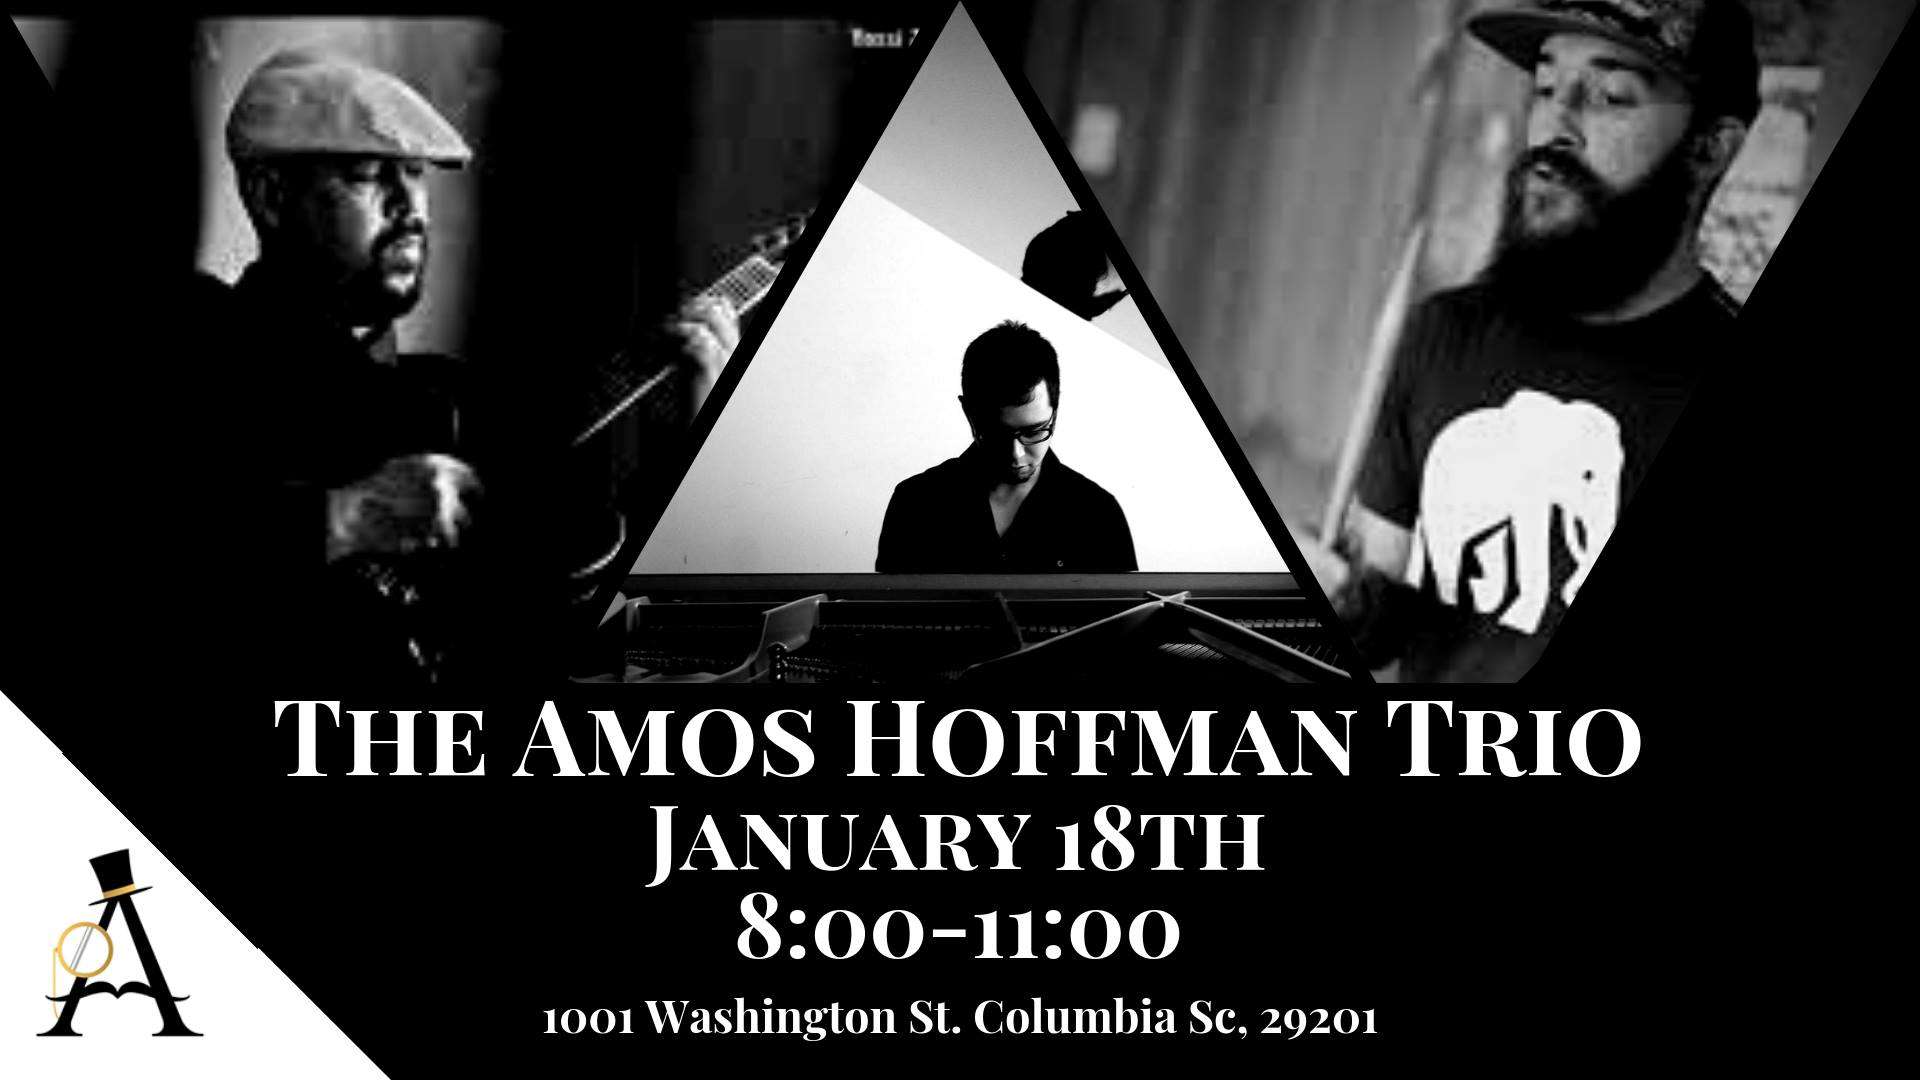 The Amos Hoffman Trio